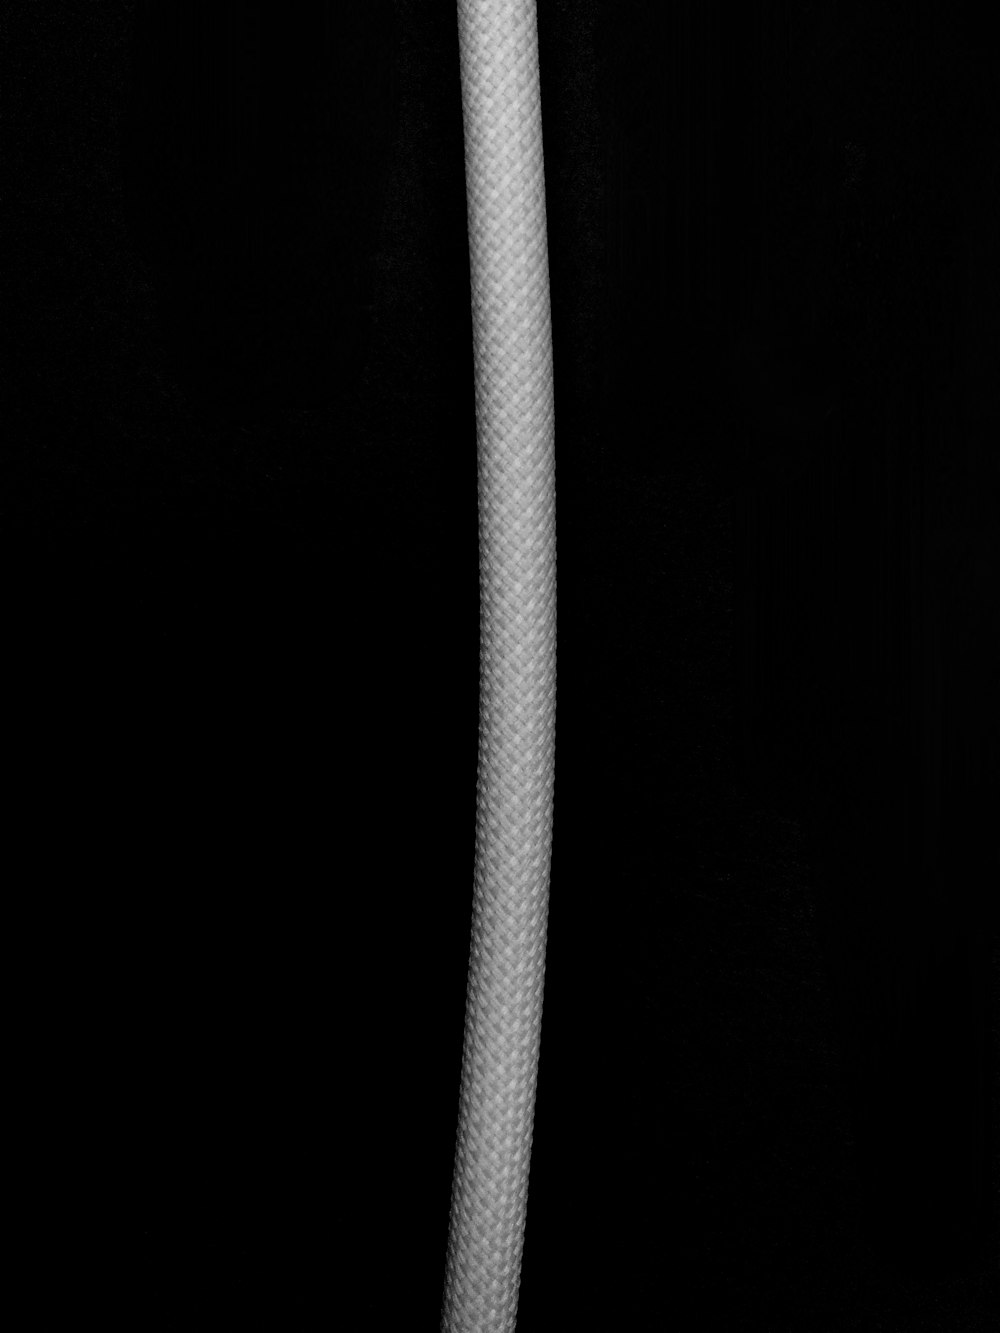 white rope on black background